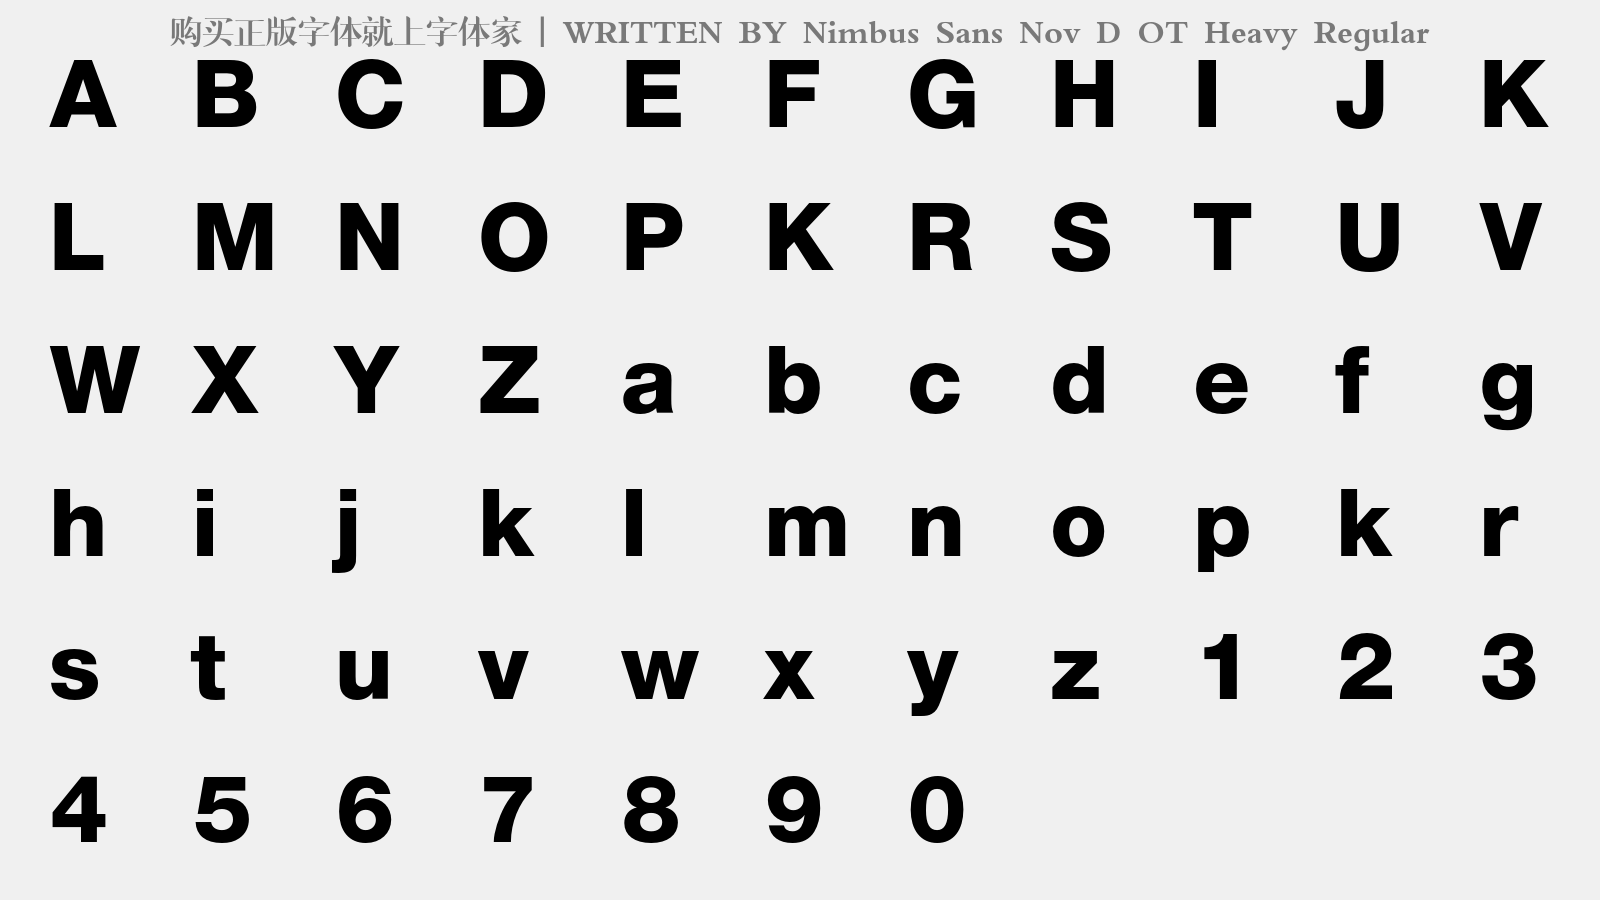 Nimbus Sans Nov D OT Heavy Regular - 大写字母/小写字母/数字